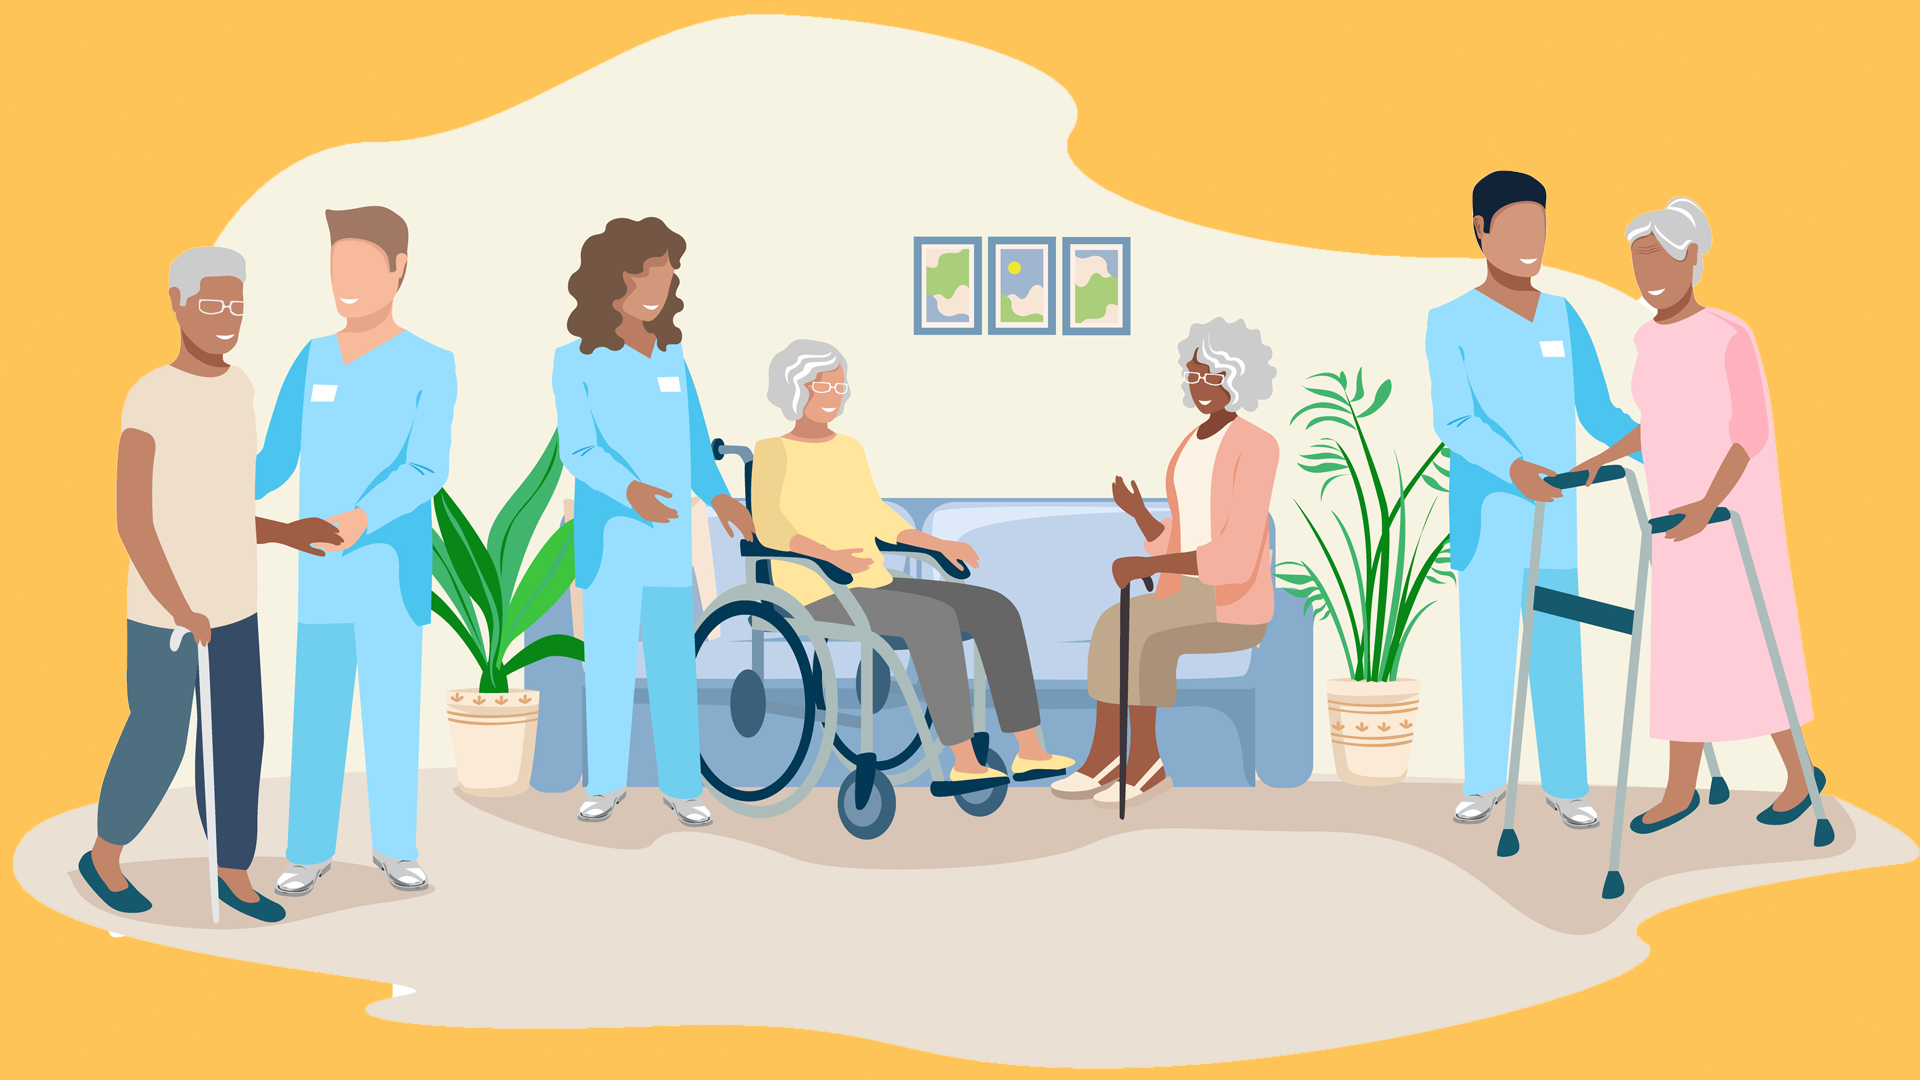 publication palliative hospice geriatric elderly care referrals © liana2012 -stockadobe.com